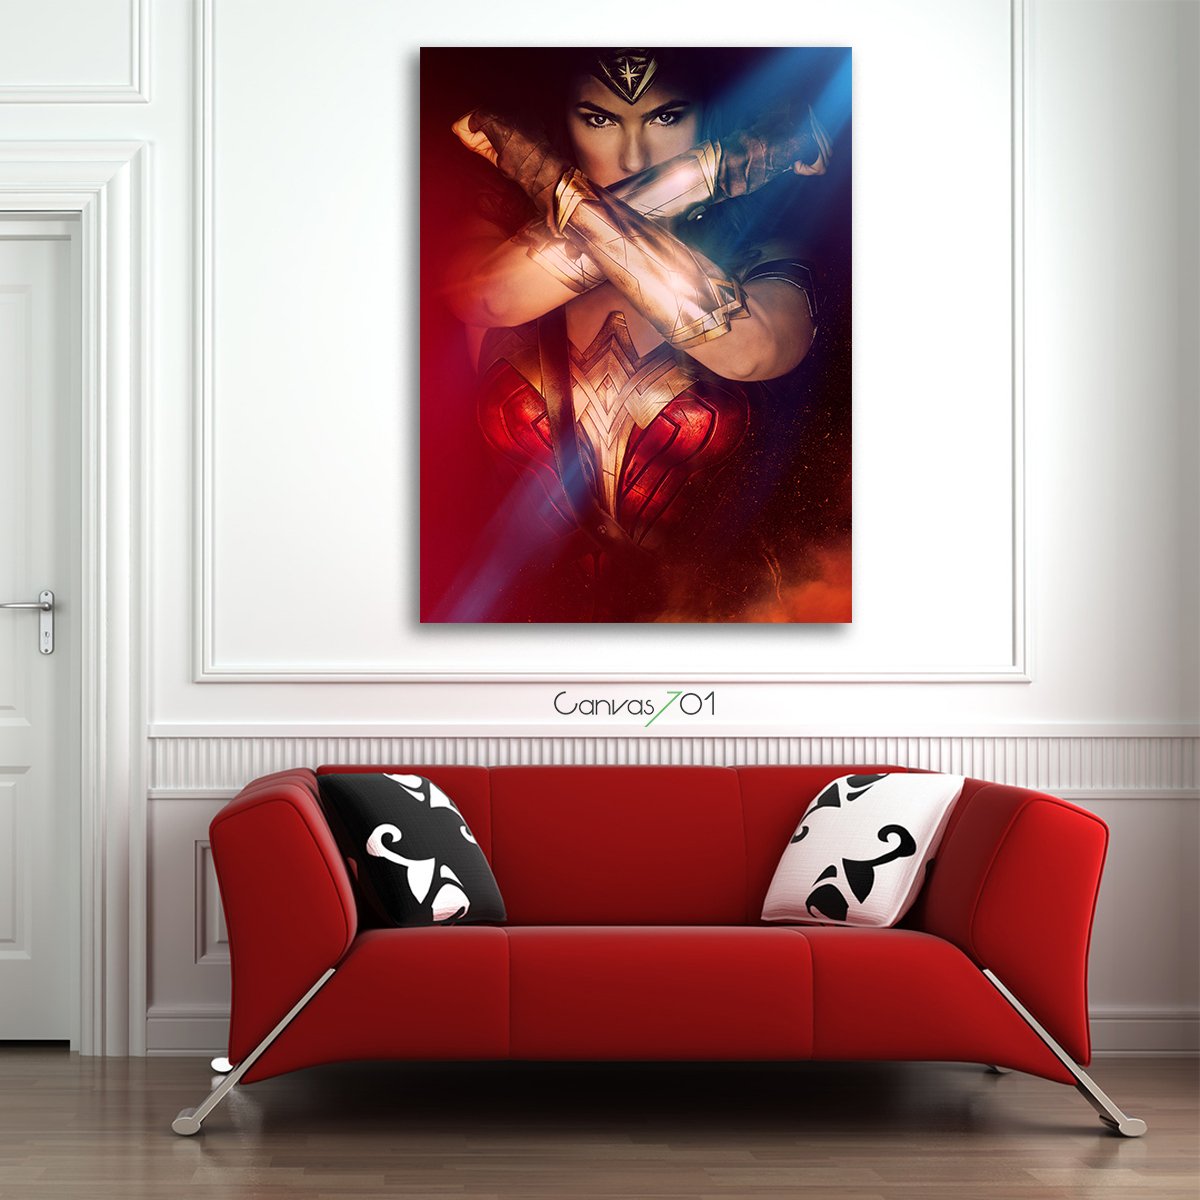 Canvas701 | Wonder Woman 3 Kanvas Tablo